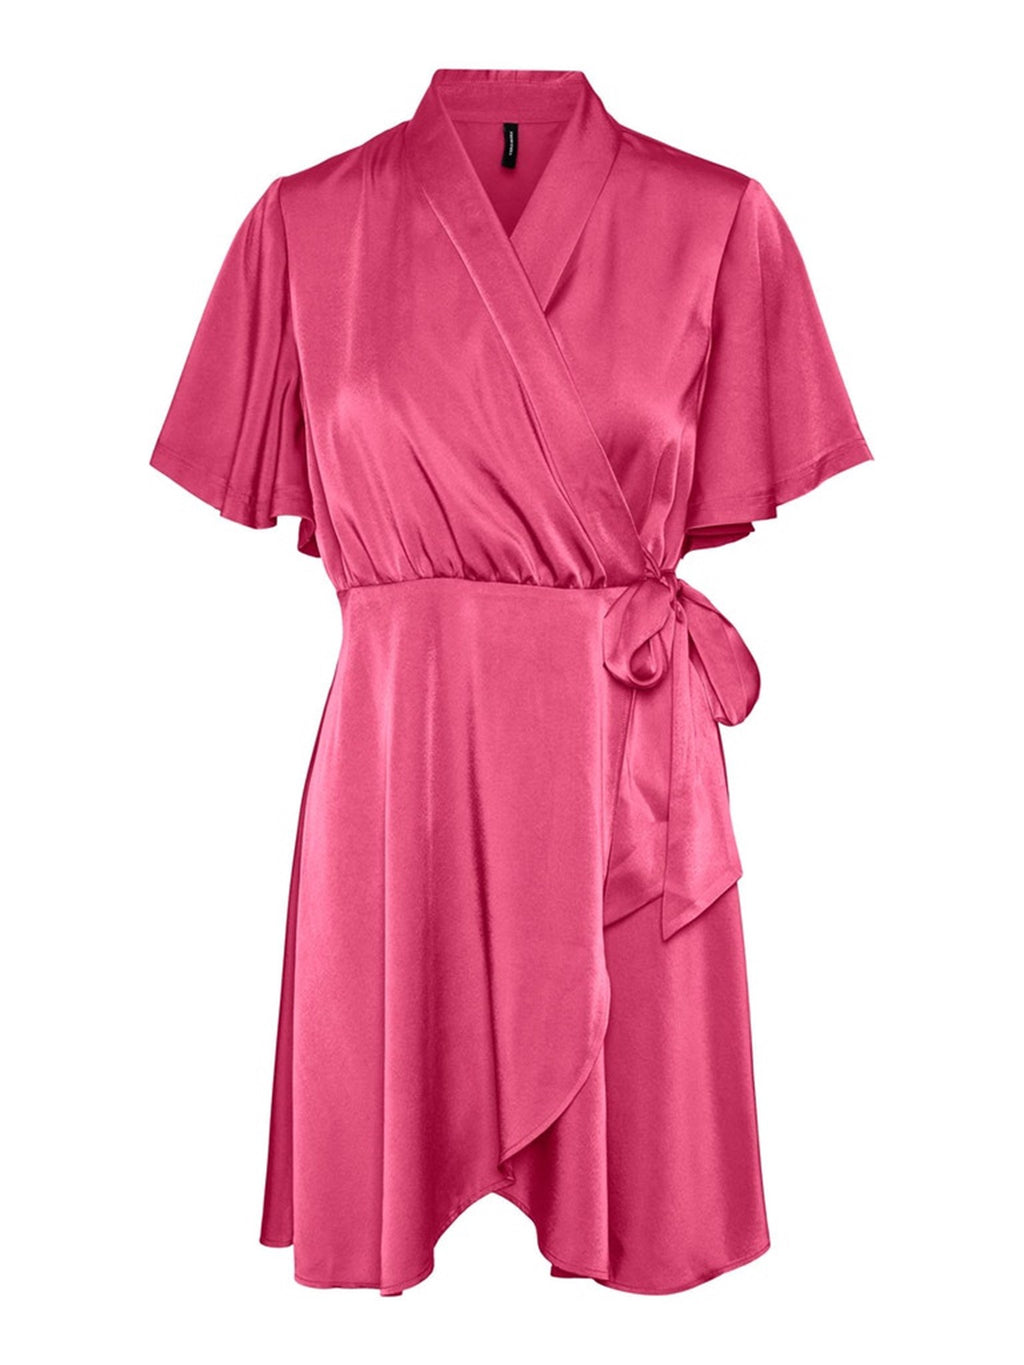 Amelia Wrap Dress - Hot Pink